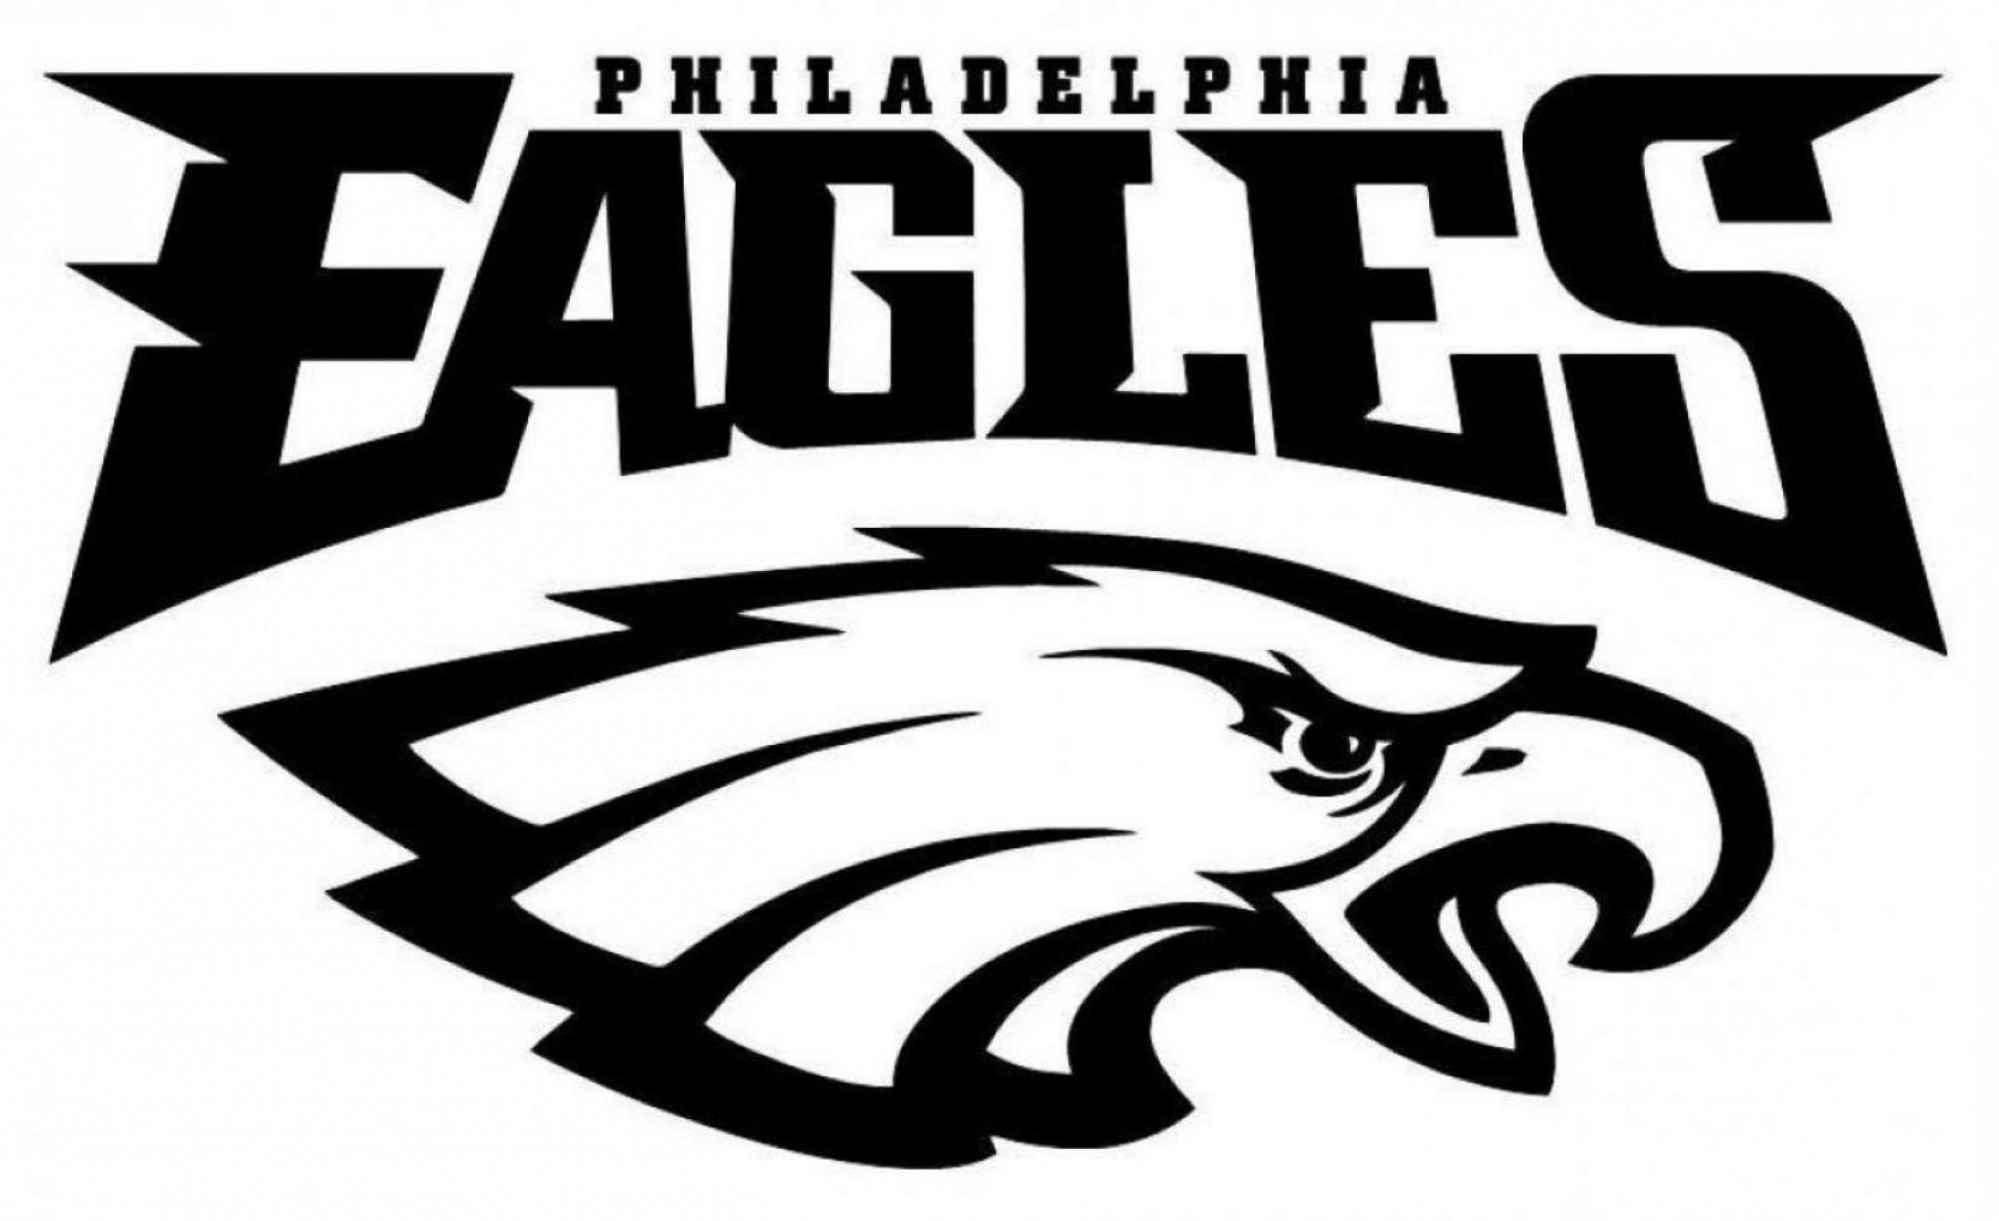 philadelphia-eagles-logo-vector-at-vectorified-collection-of